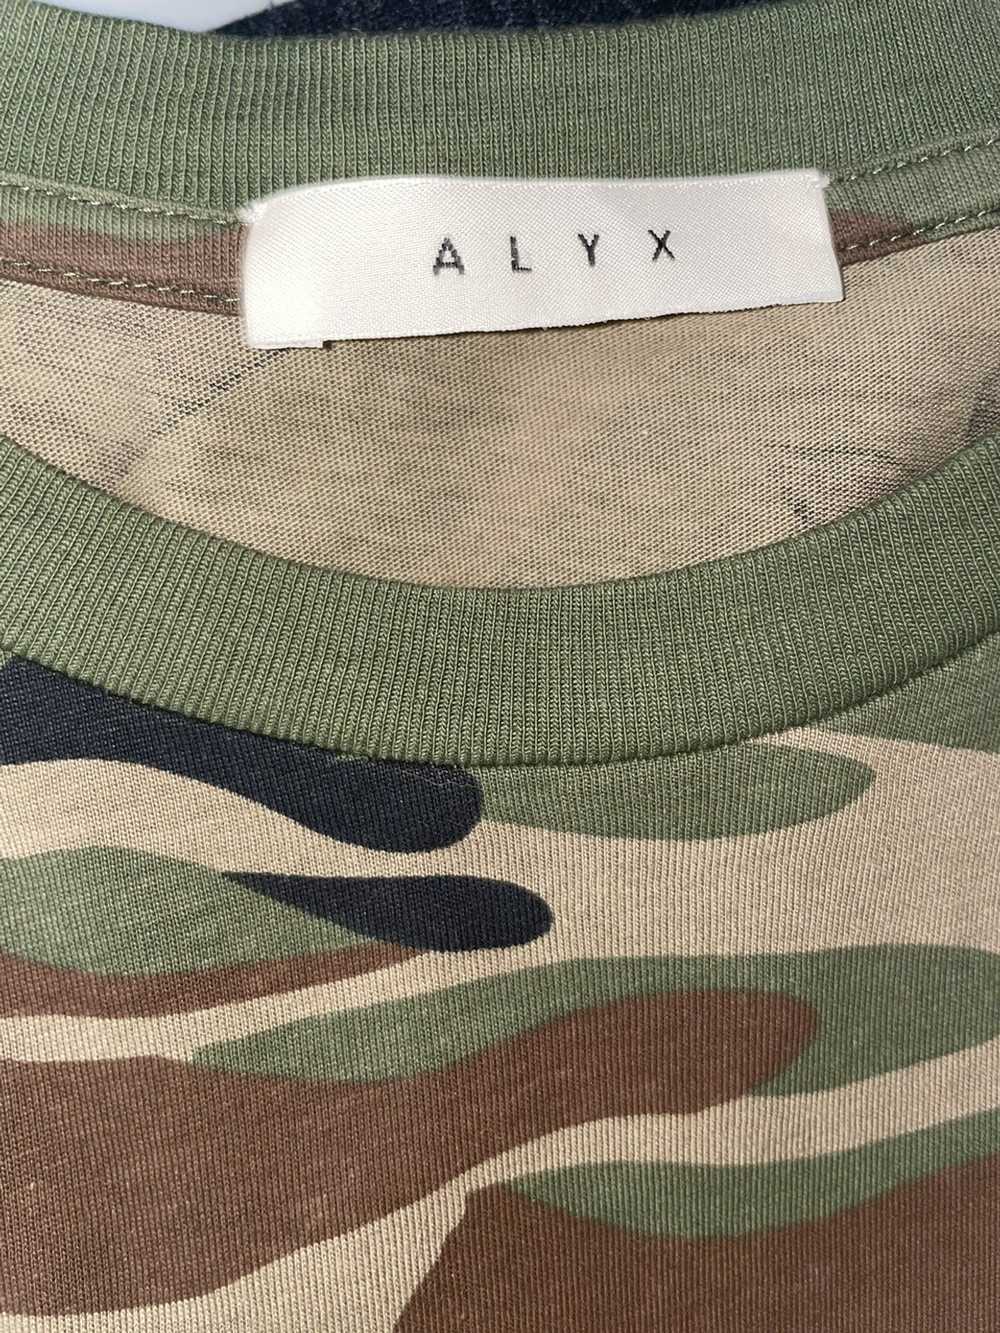 Alyx Alyx ‘Natural Order’ T-Shirt - image 3